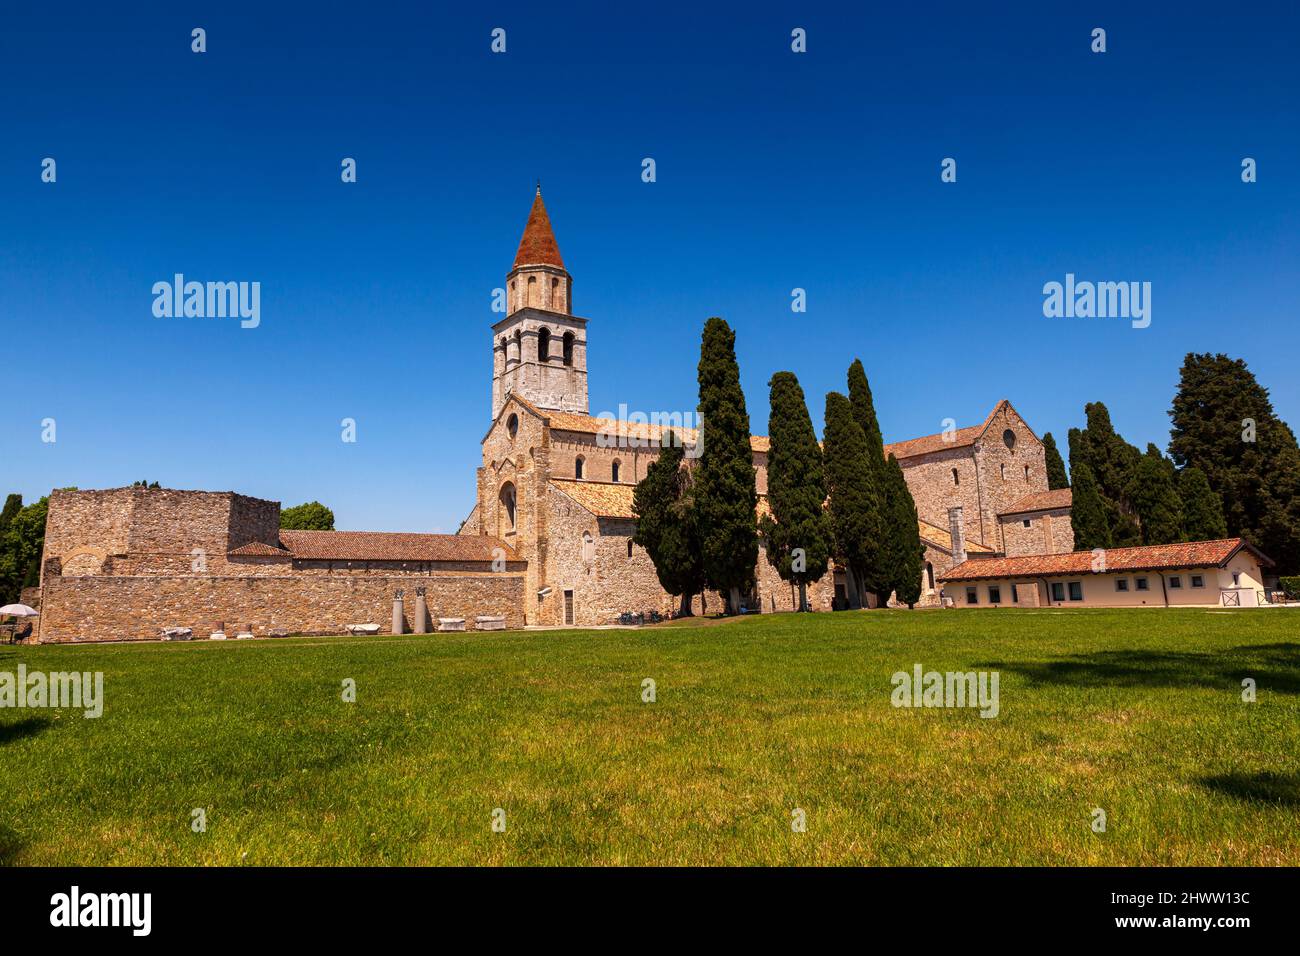 Basilica di Santa Maria Assunta in Aquileia, Udine, Italia. Basilica patriarcale di Aquileia costruita nel 11th secolo. Importante vista cristiana da Roma Foto Stock